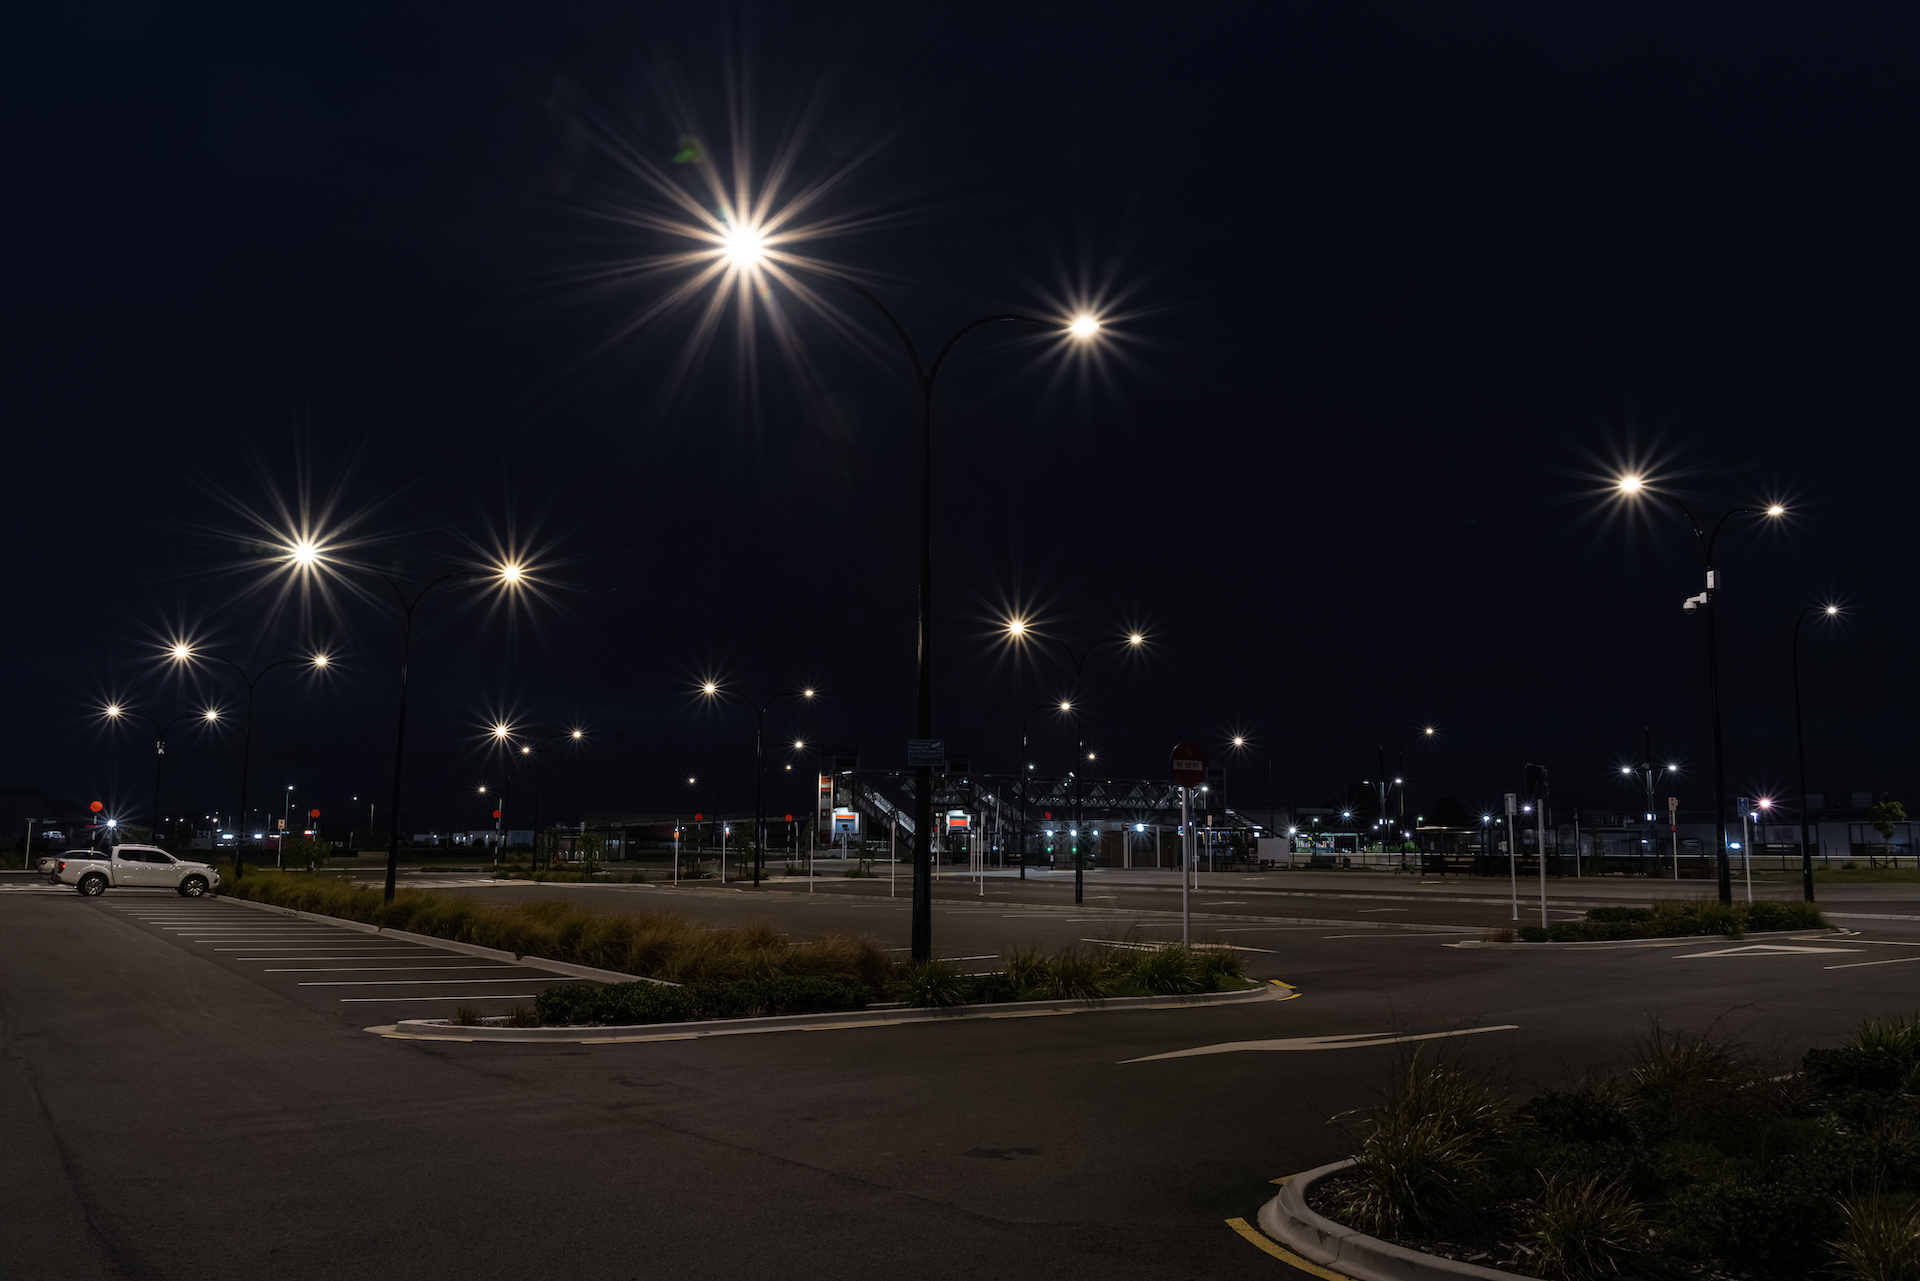 Rotokauri parking at night illuminated by ibex lighting solutions.